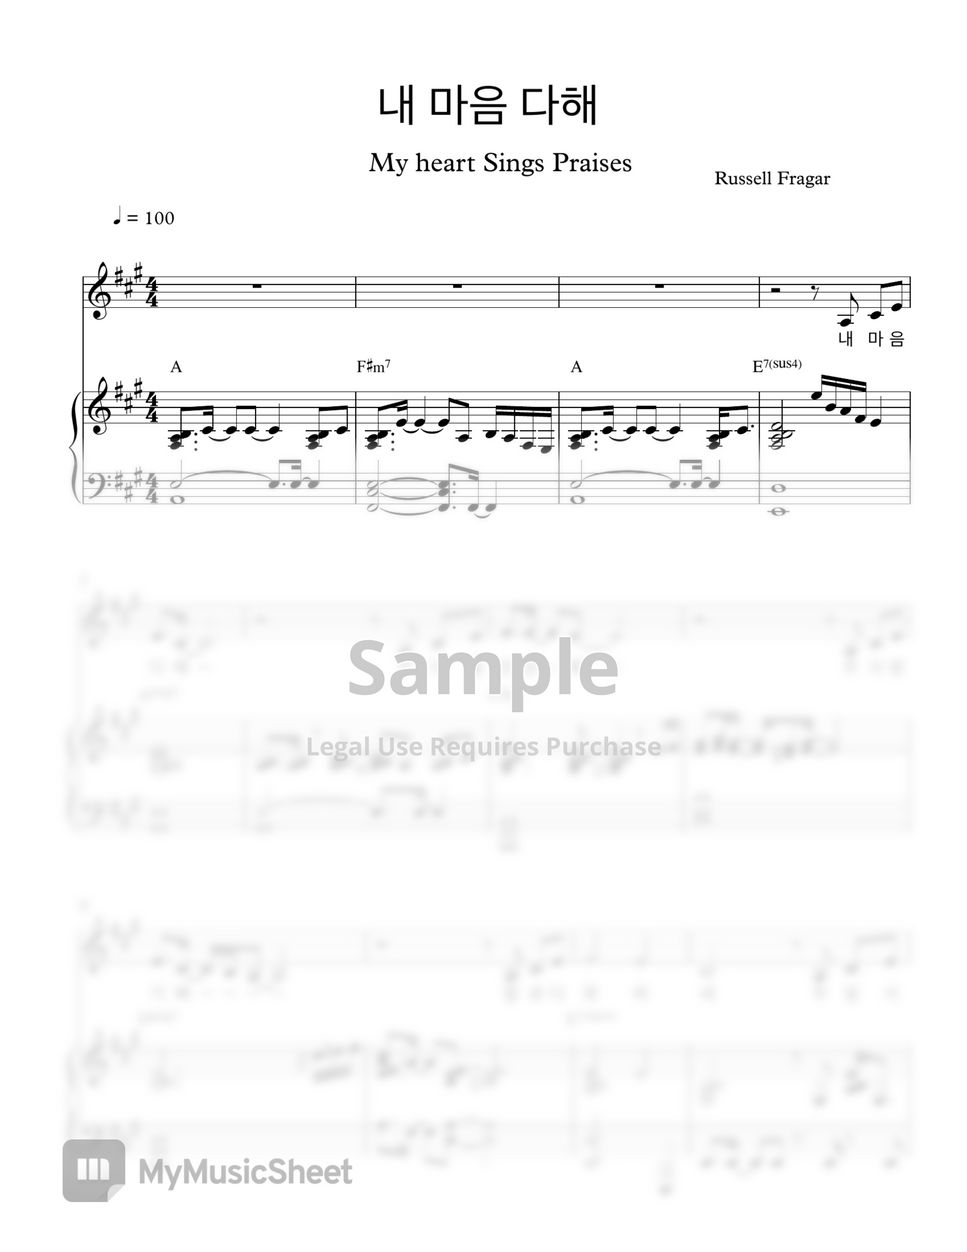 Russell Fragar - My heart sings praises A key (재즈 Funk) by MIWHA